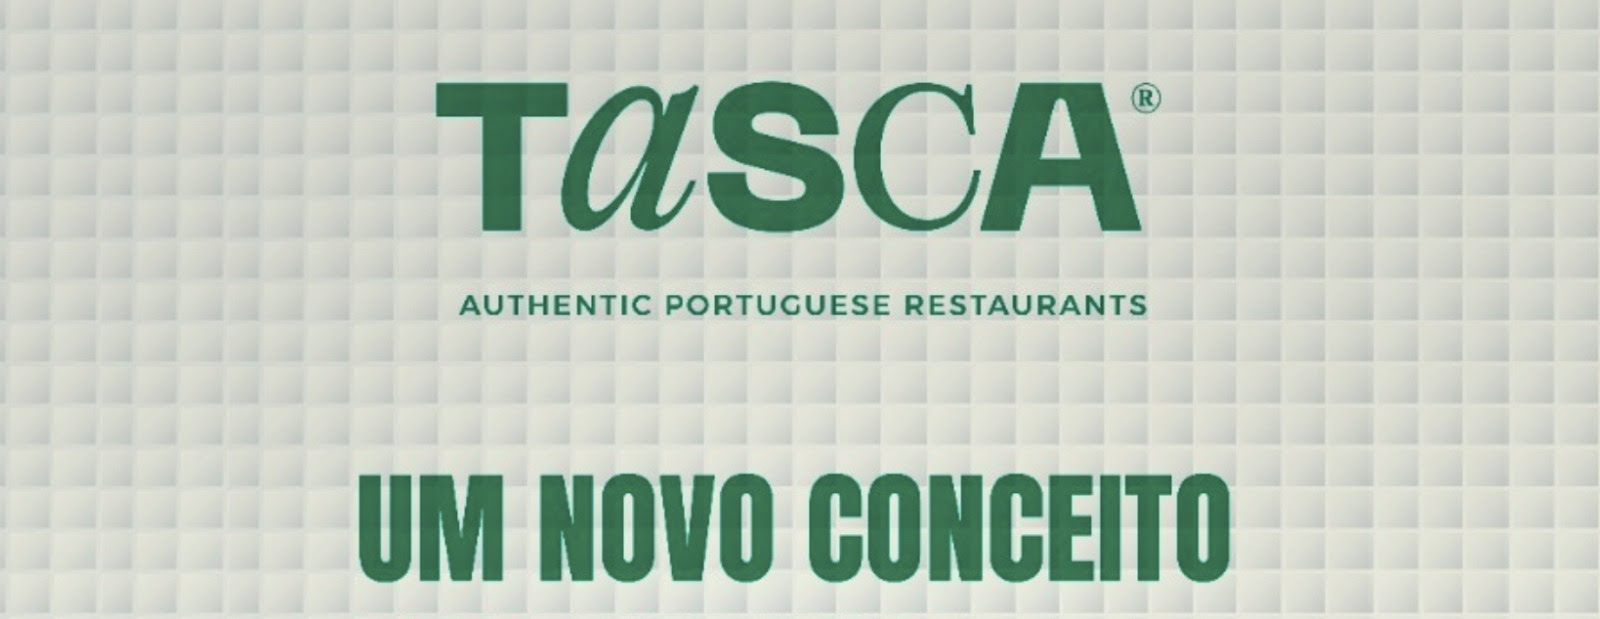 AHRESP - Projeto TASCA revela características únicas da gastronomia tradicional portuguesa